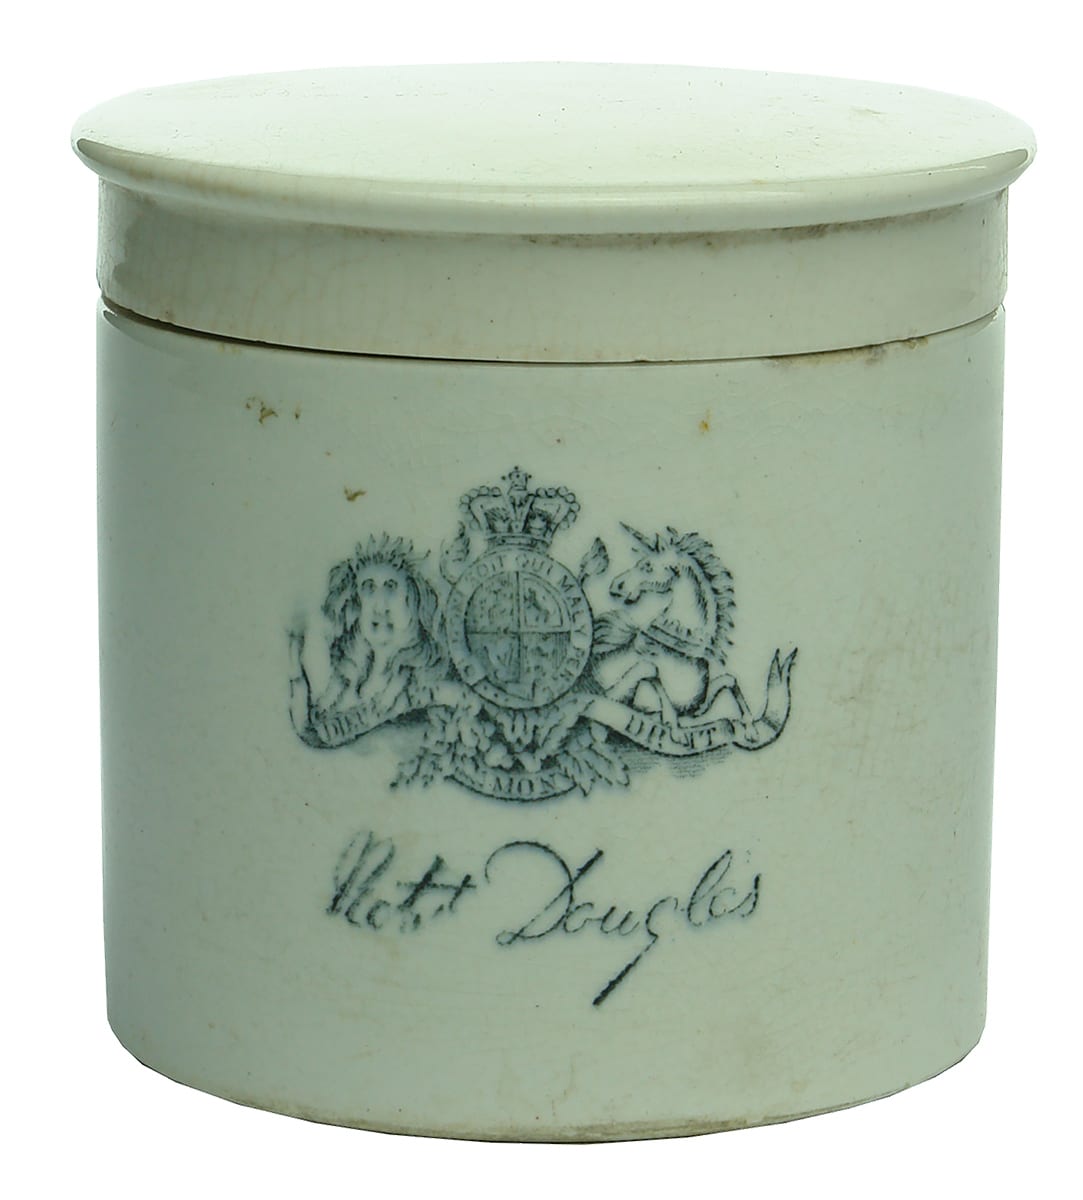 Robt Douglas Ceramic Jar